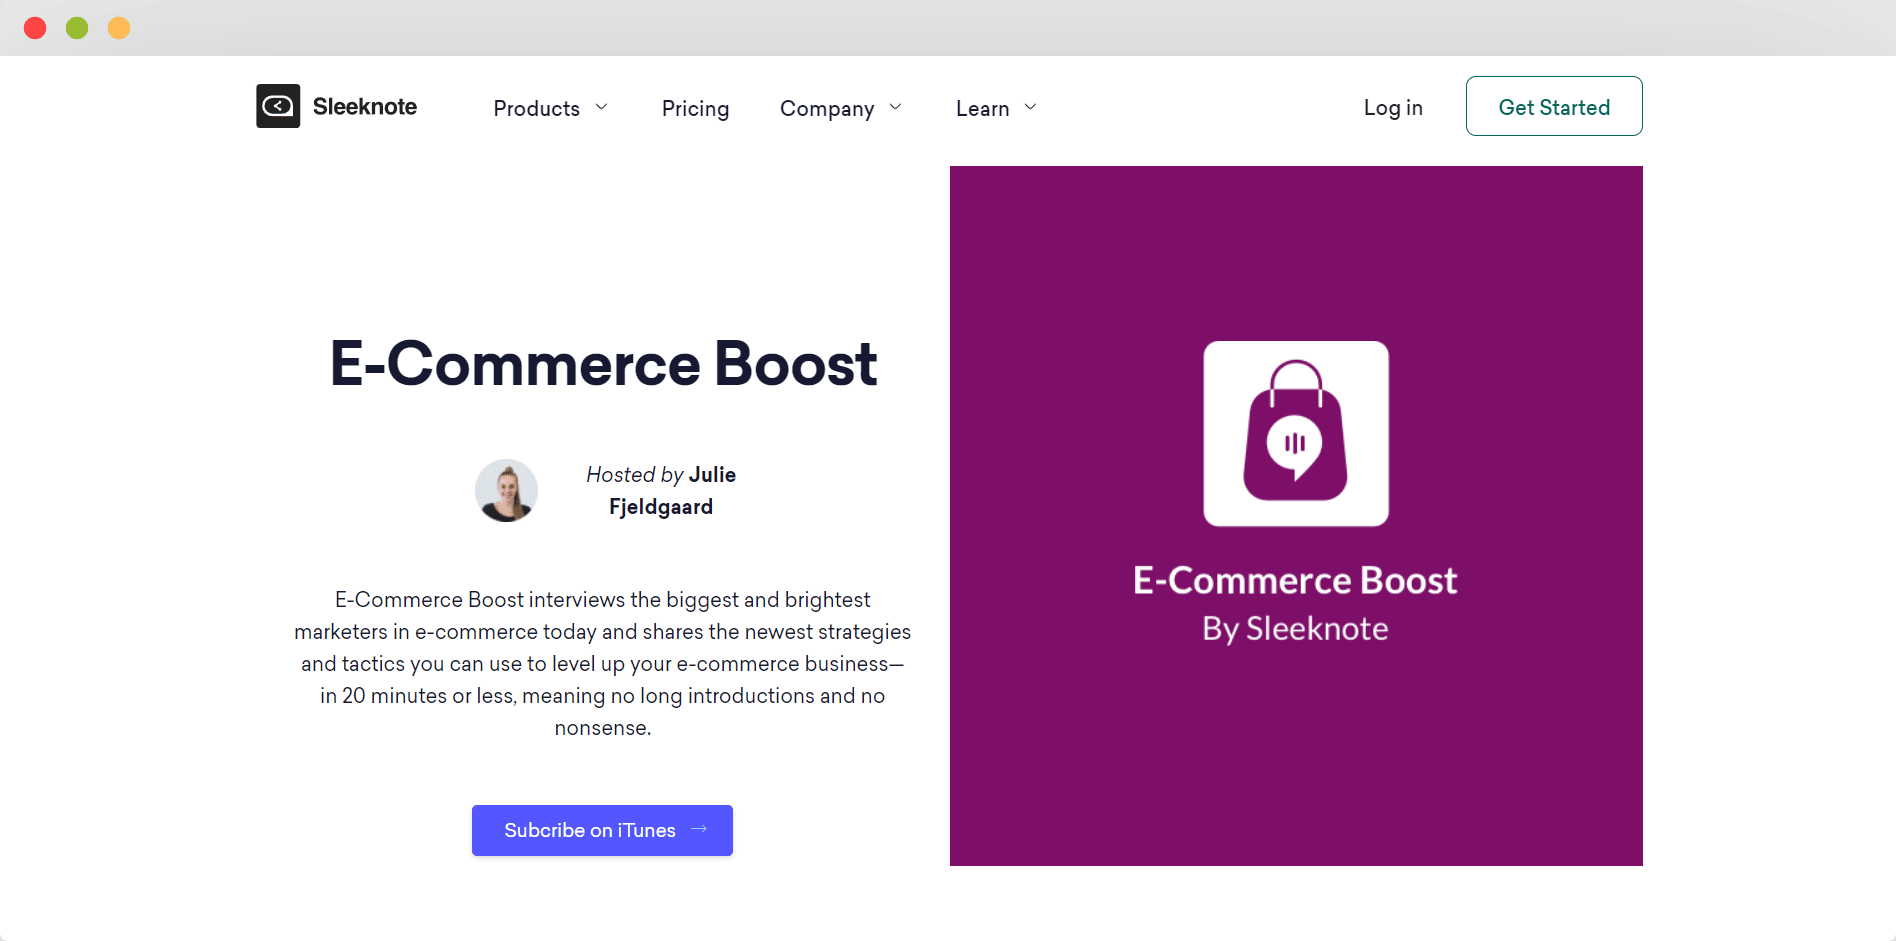 eCommerce Boost